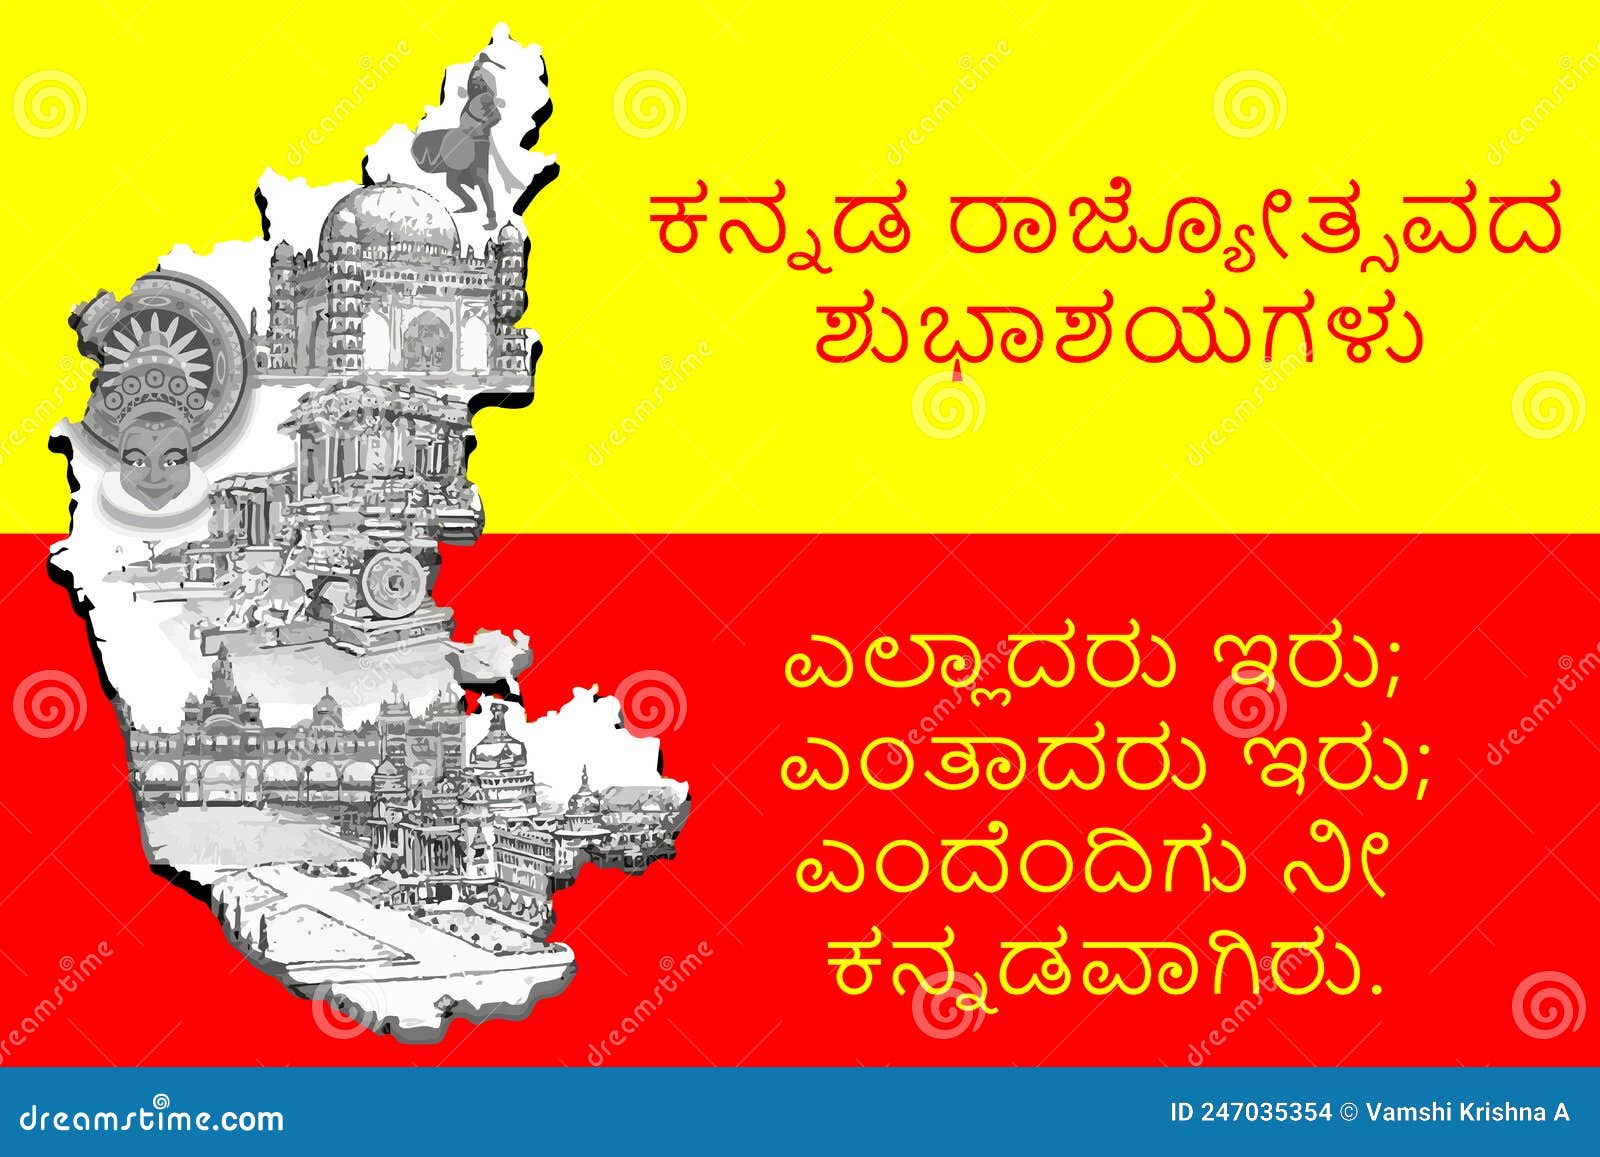 Kannada Rajyotsava Greetings Stock Illustration - Illustration of ...